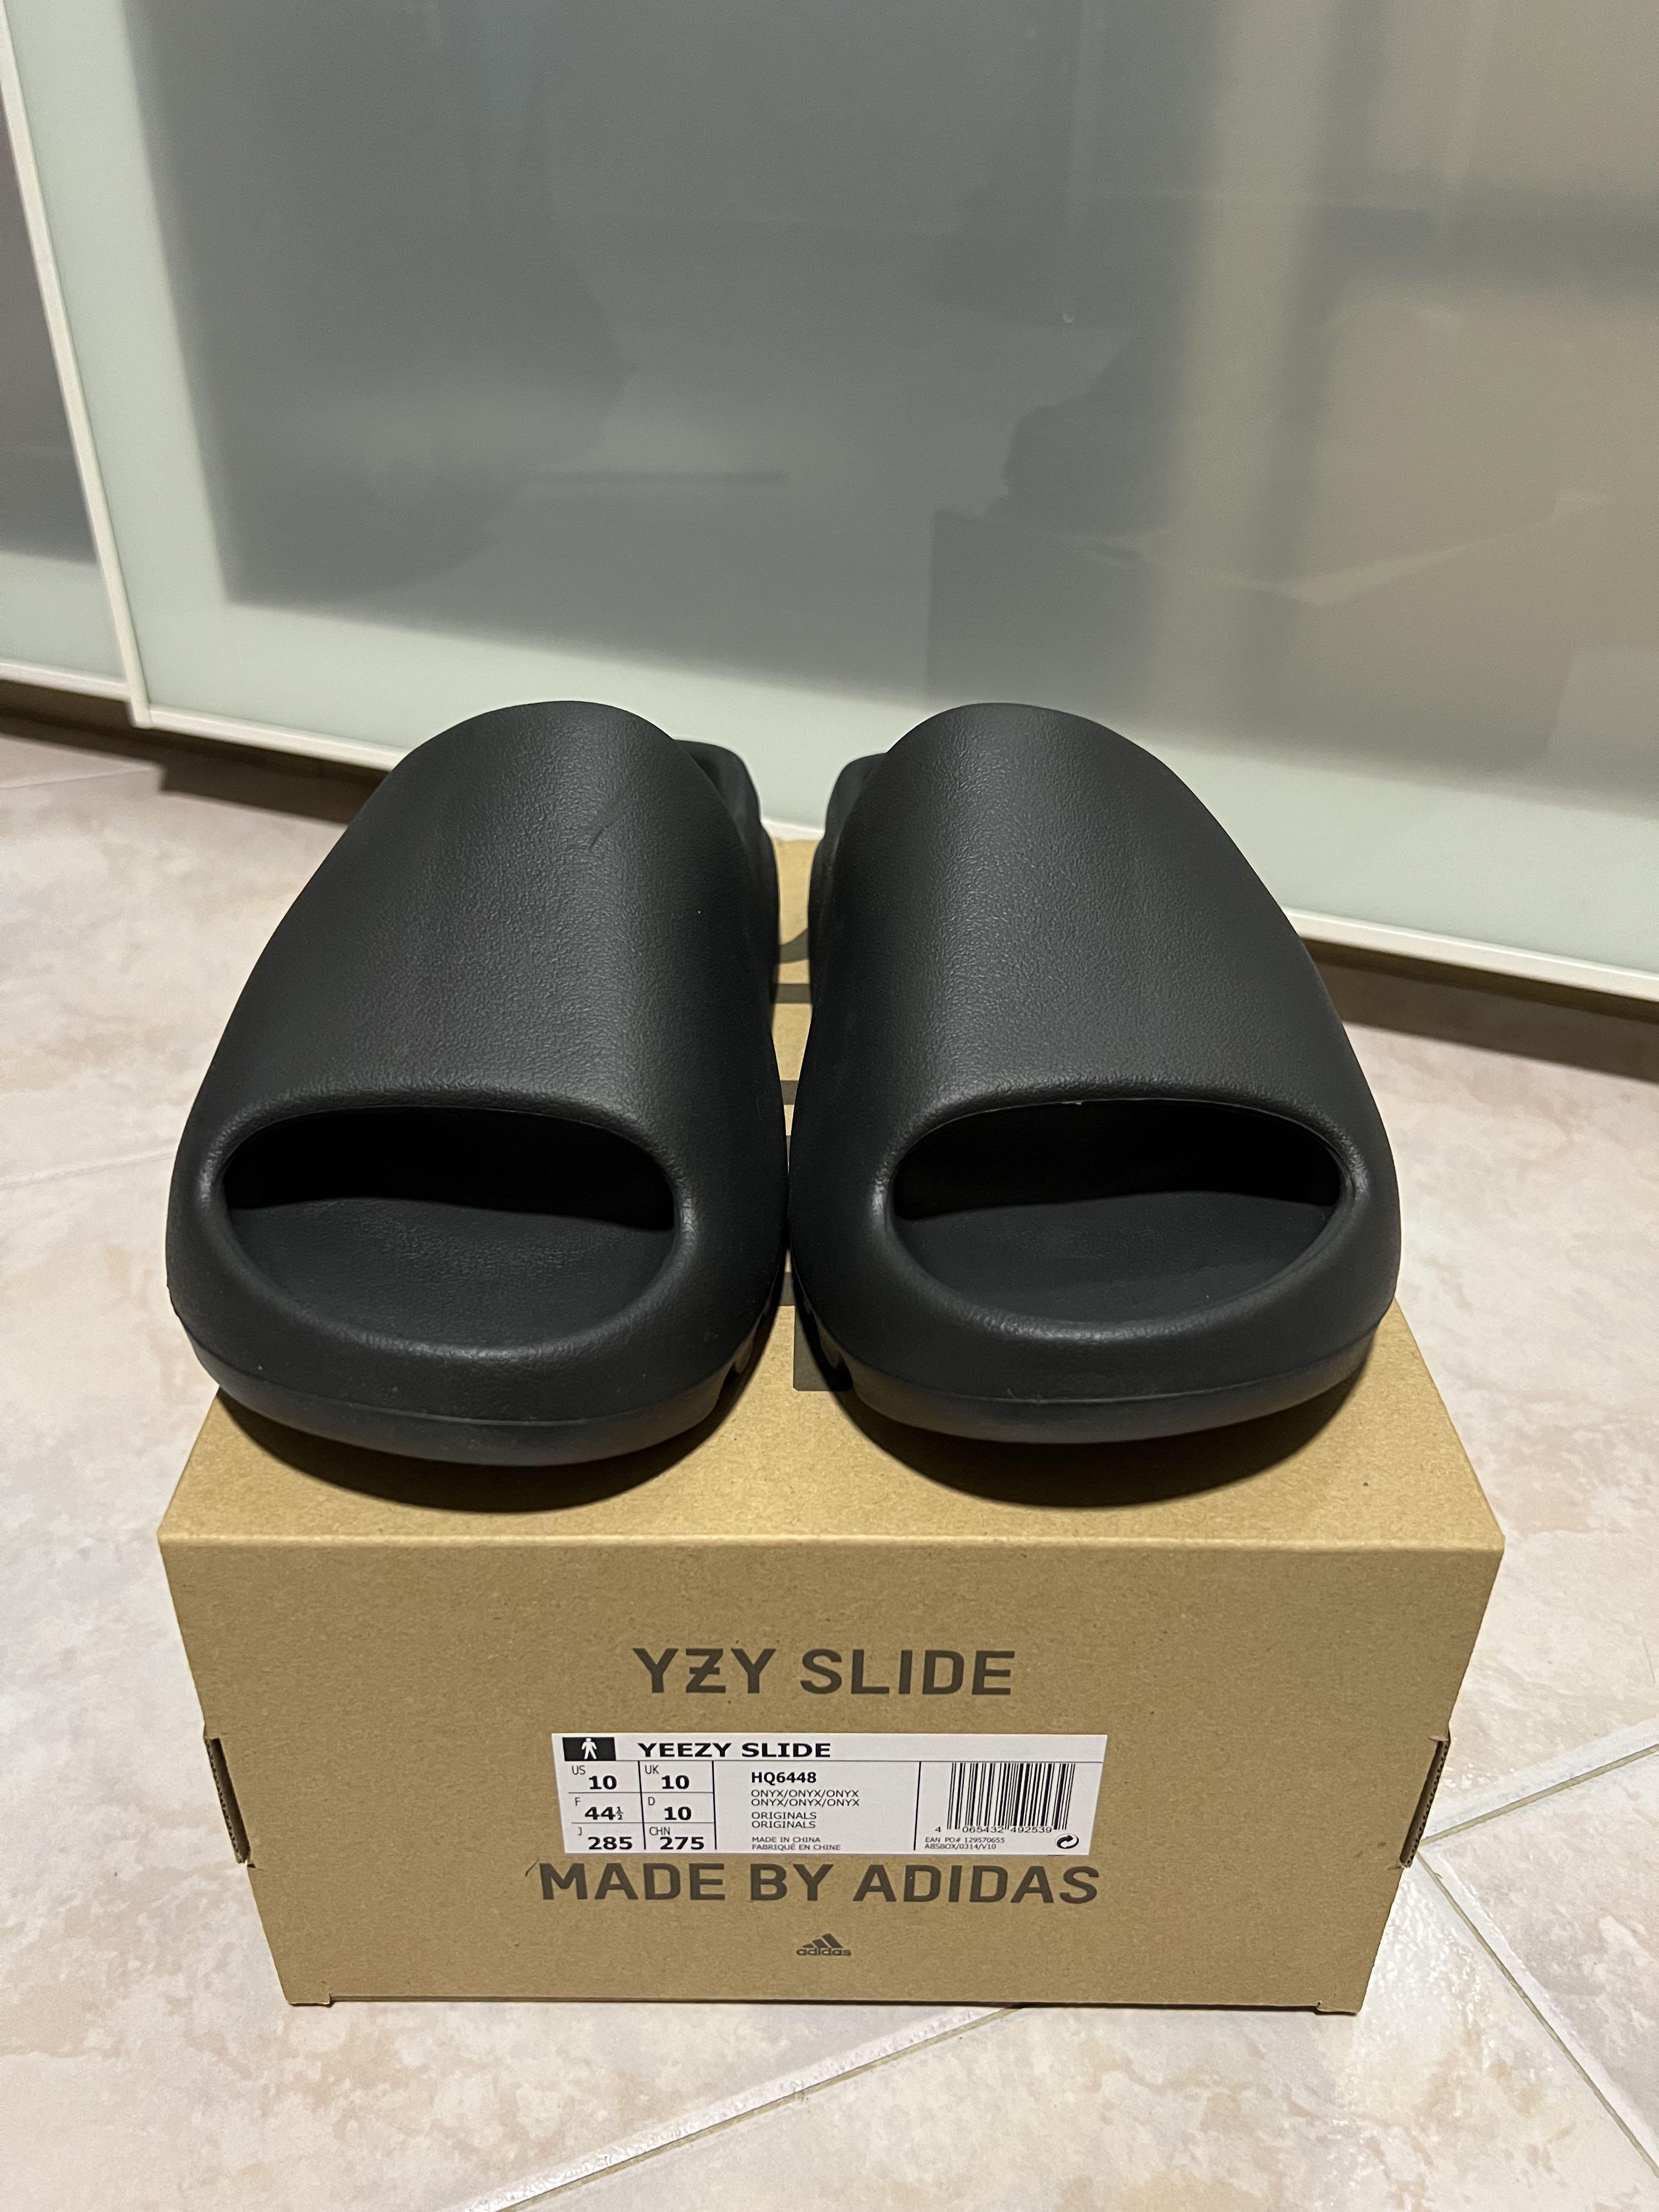 adidas Yeezy Slide Onyx (2022/2023) Men's - HQ6448 - US